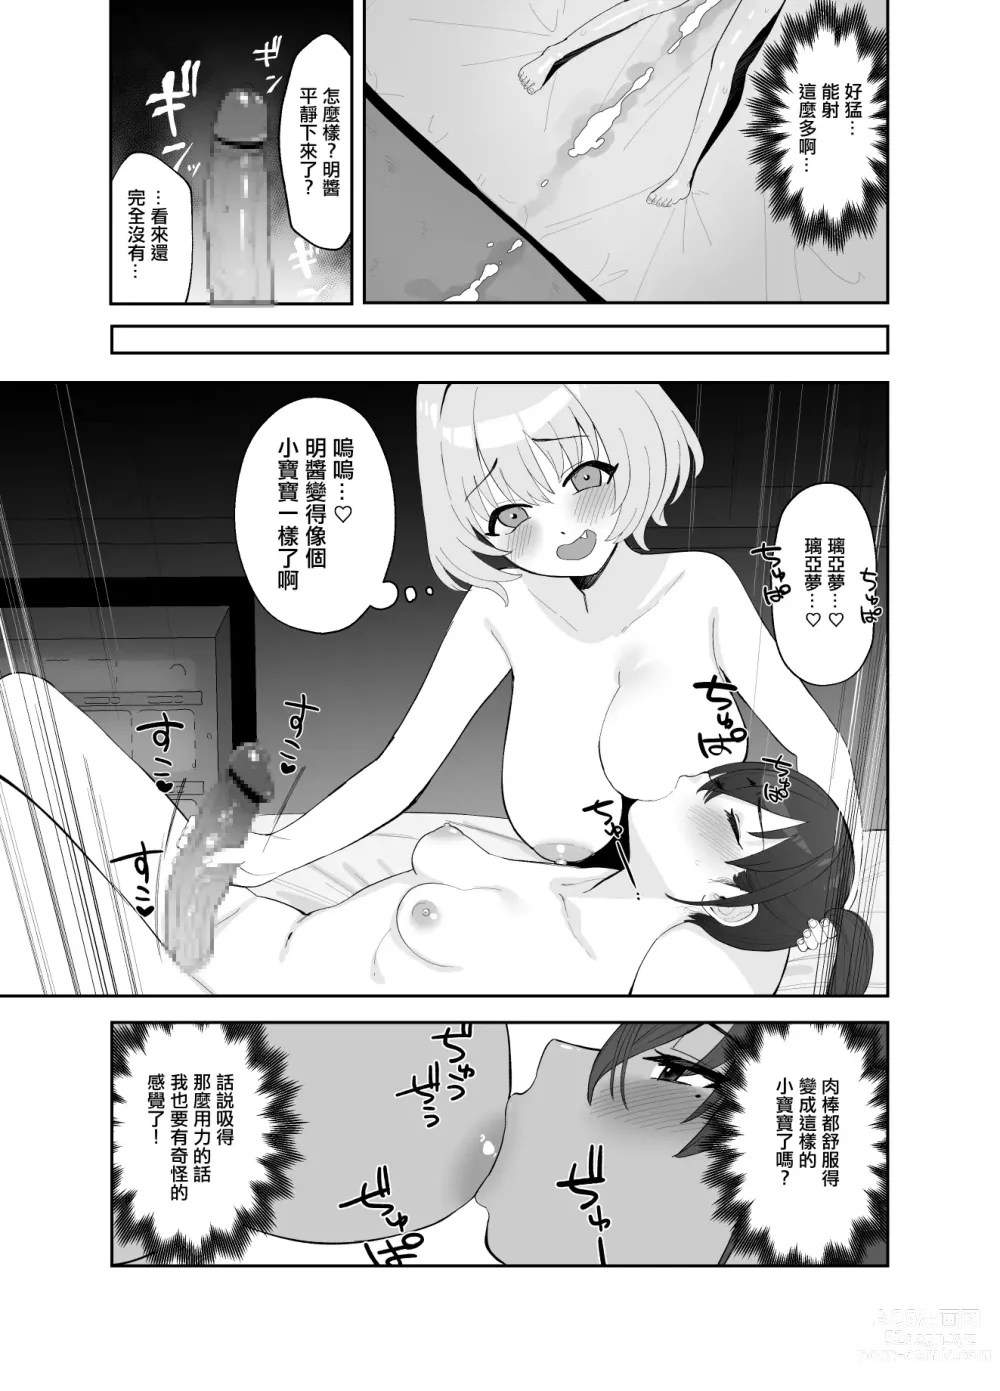 Page 8 of doujinshi 明長出了肉棒與璃亞夢做愛的漫畫